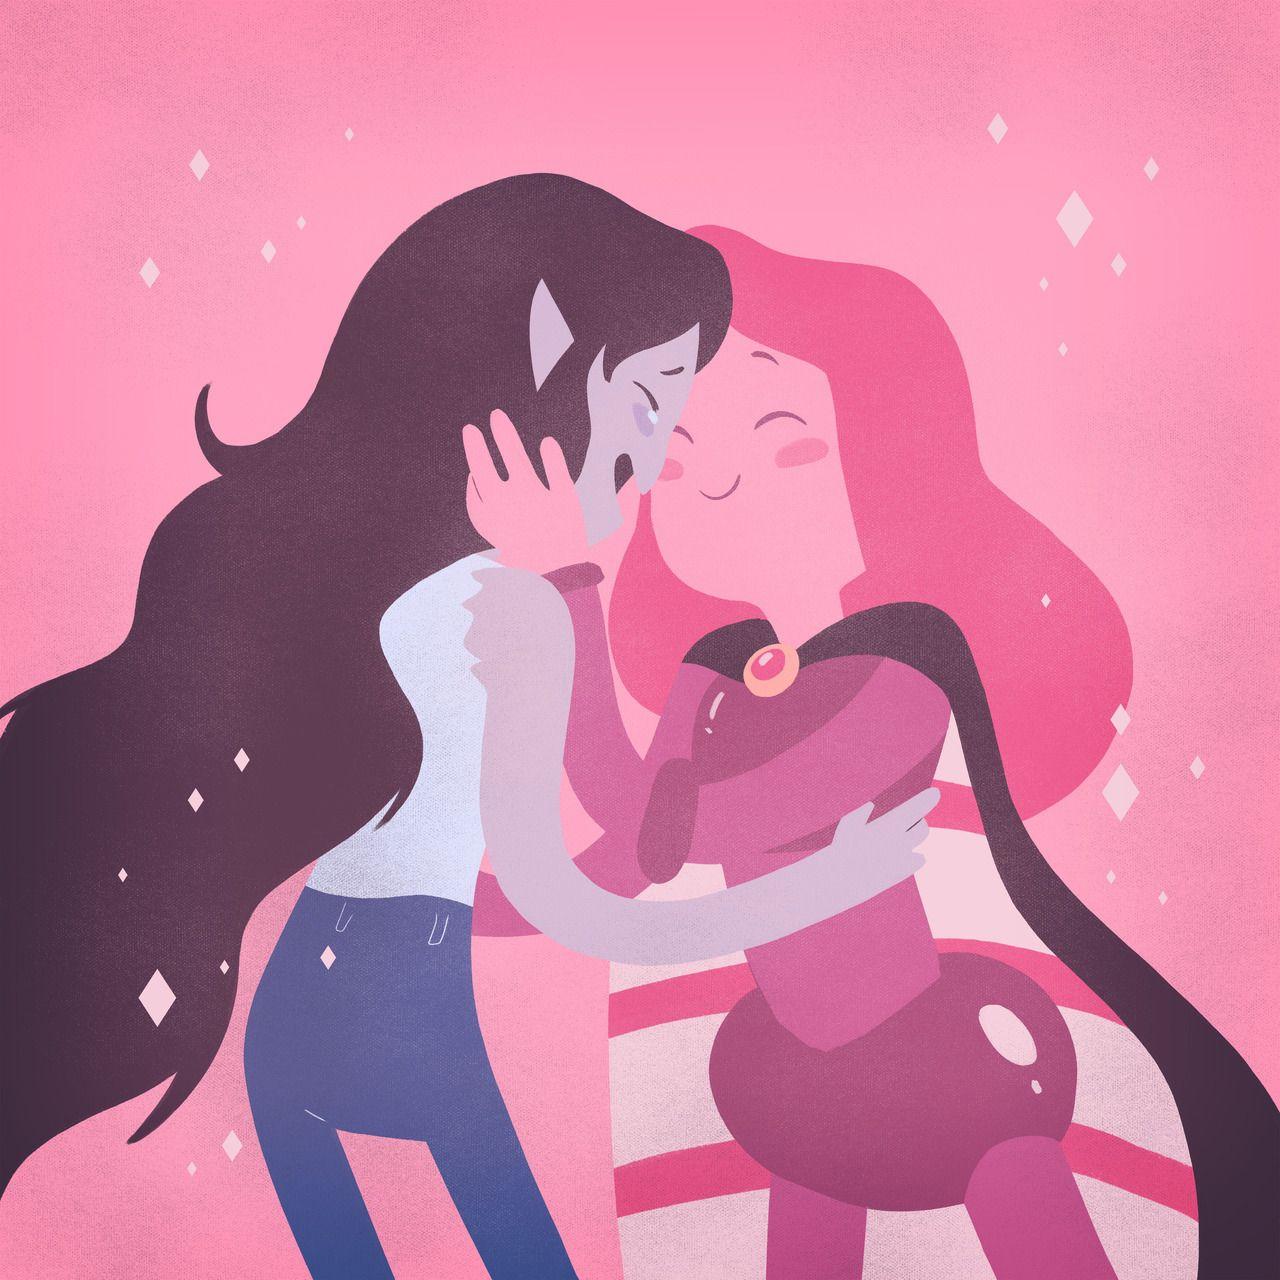 princess bubblegum and fionna kiss